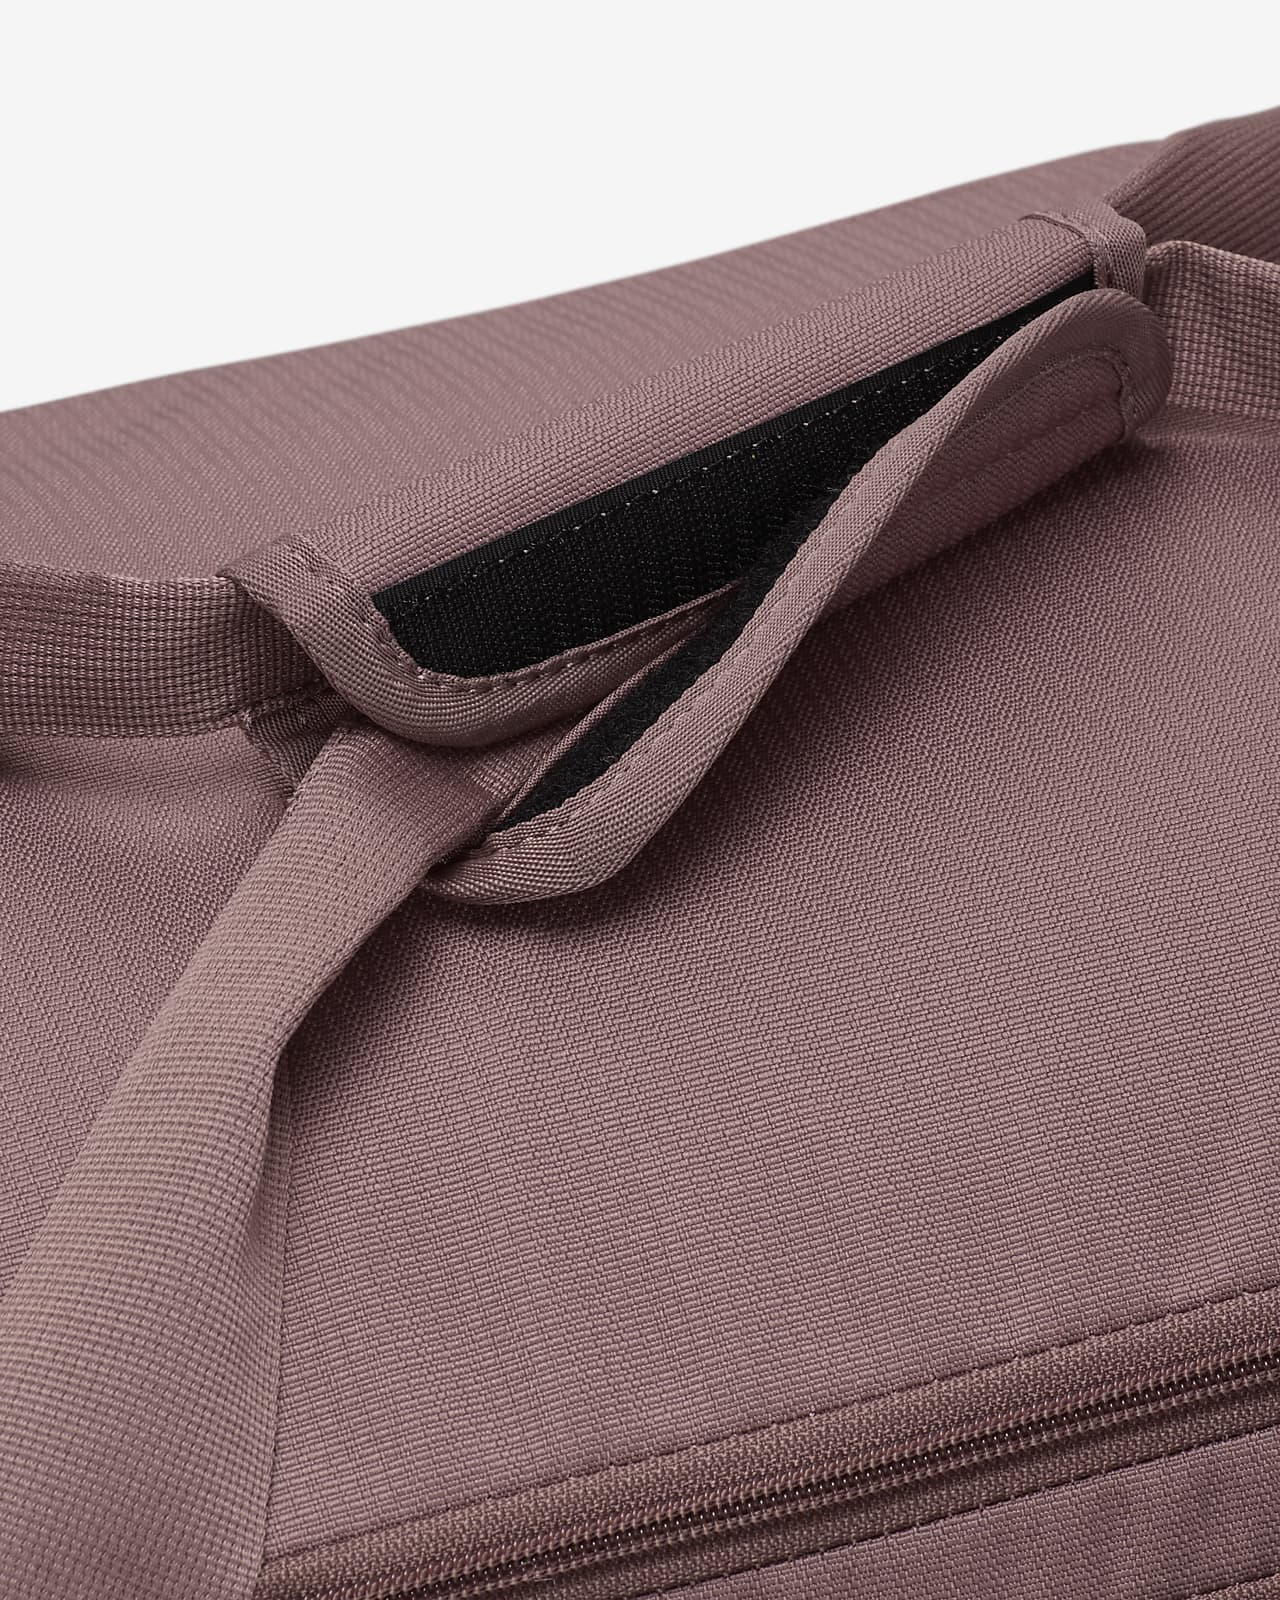 Nike Brasilia 9.5 Training Duffel Bag Pink Foam / Black - Black